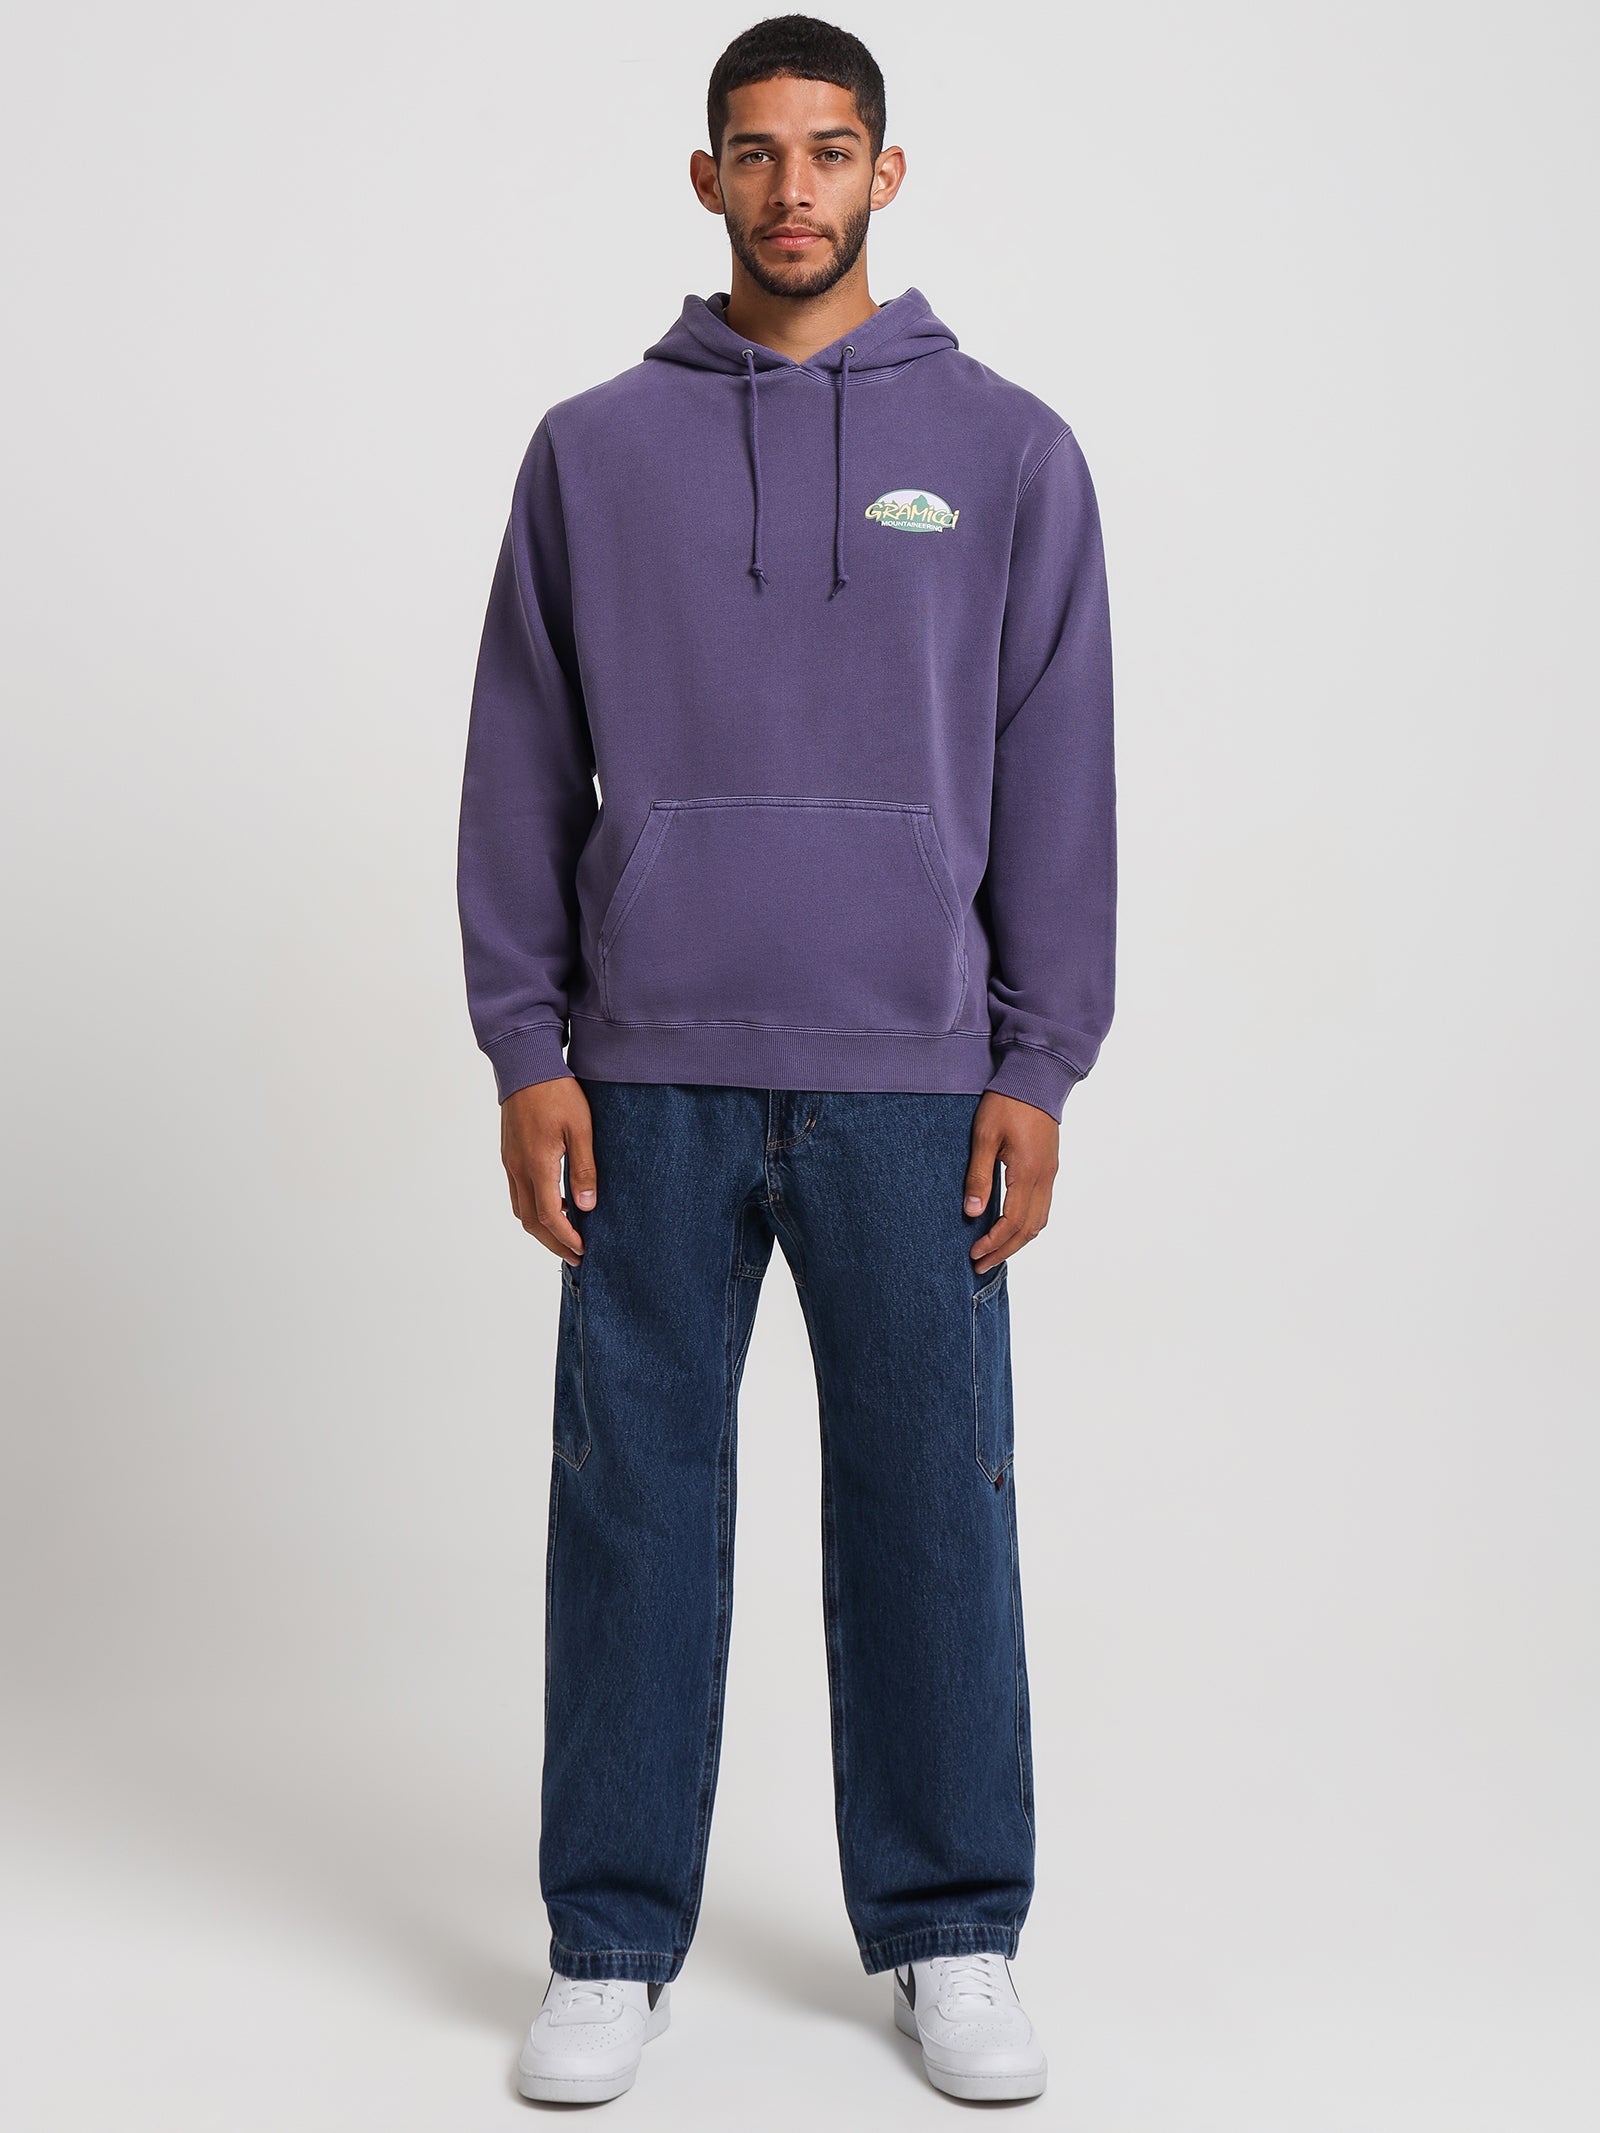 Summit Hooded Sweatshirt in Purple Pigment